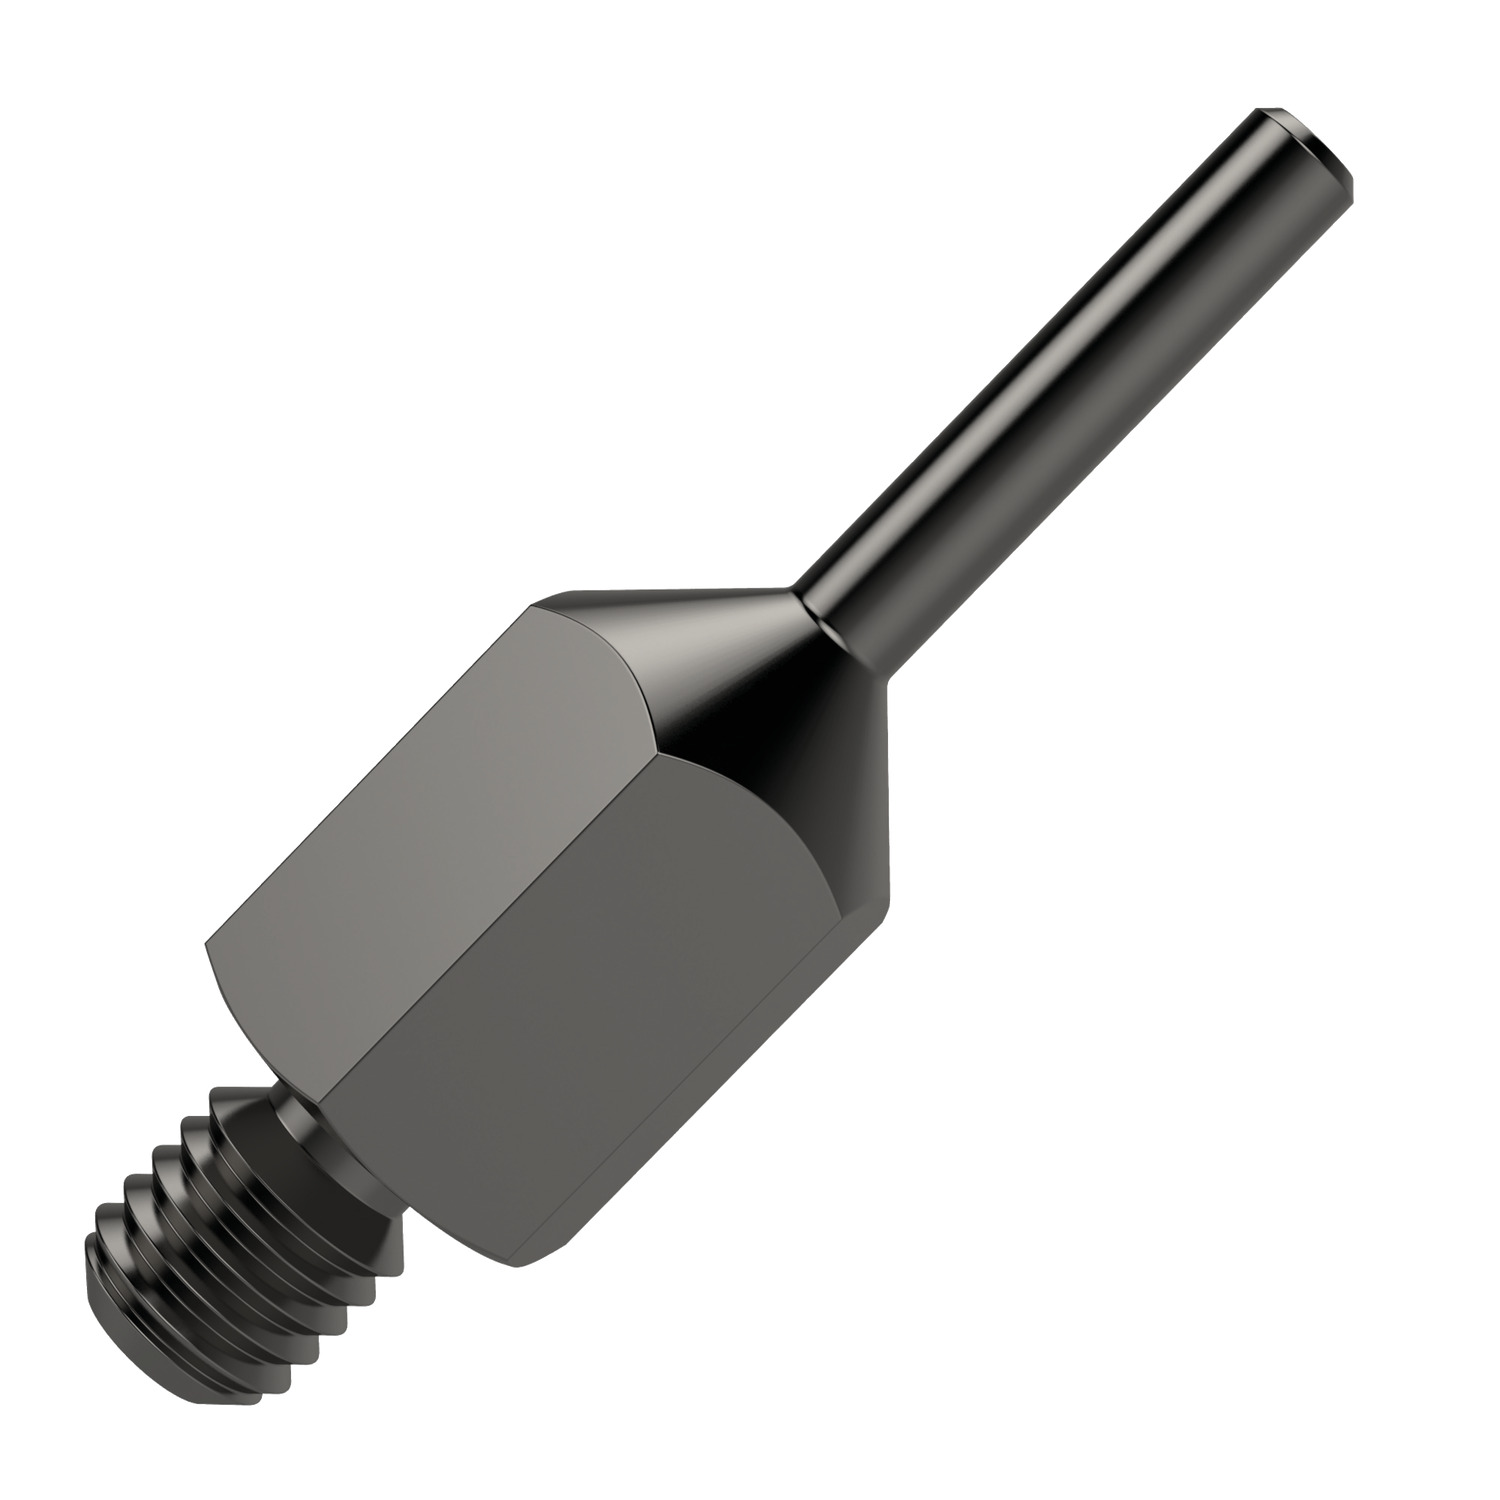 36440.W0402 Locating Pins - Heat treated steel. Male Thread - 20 - M 6 - 4